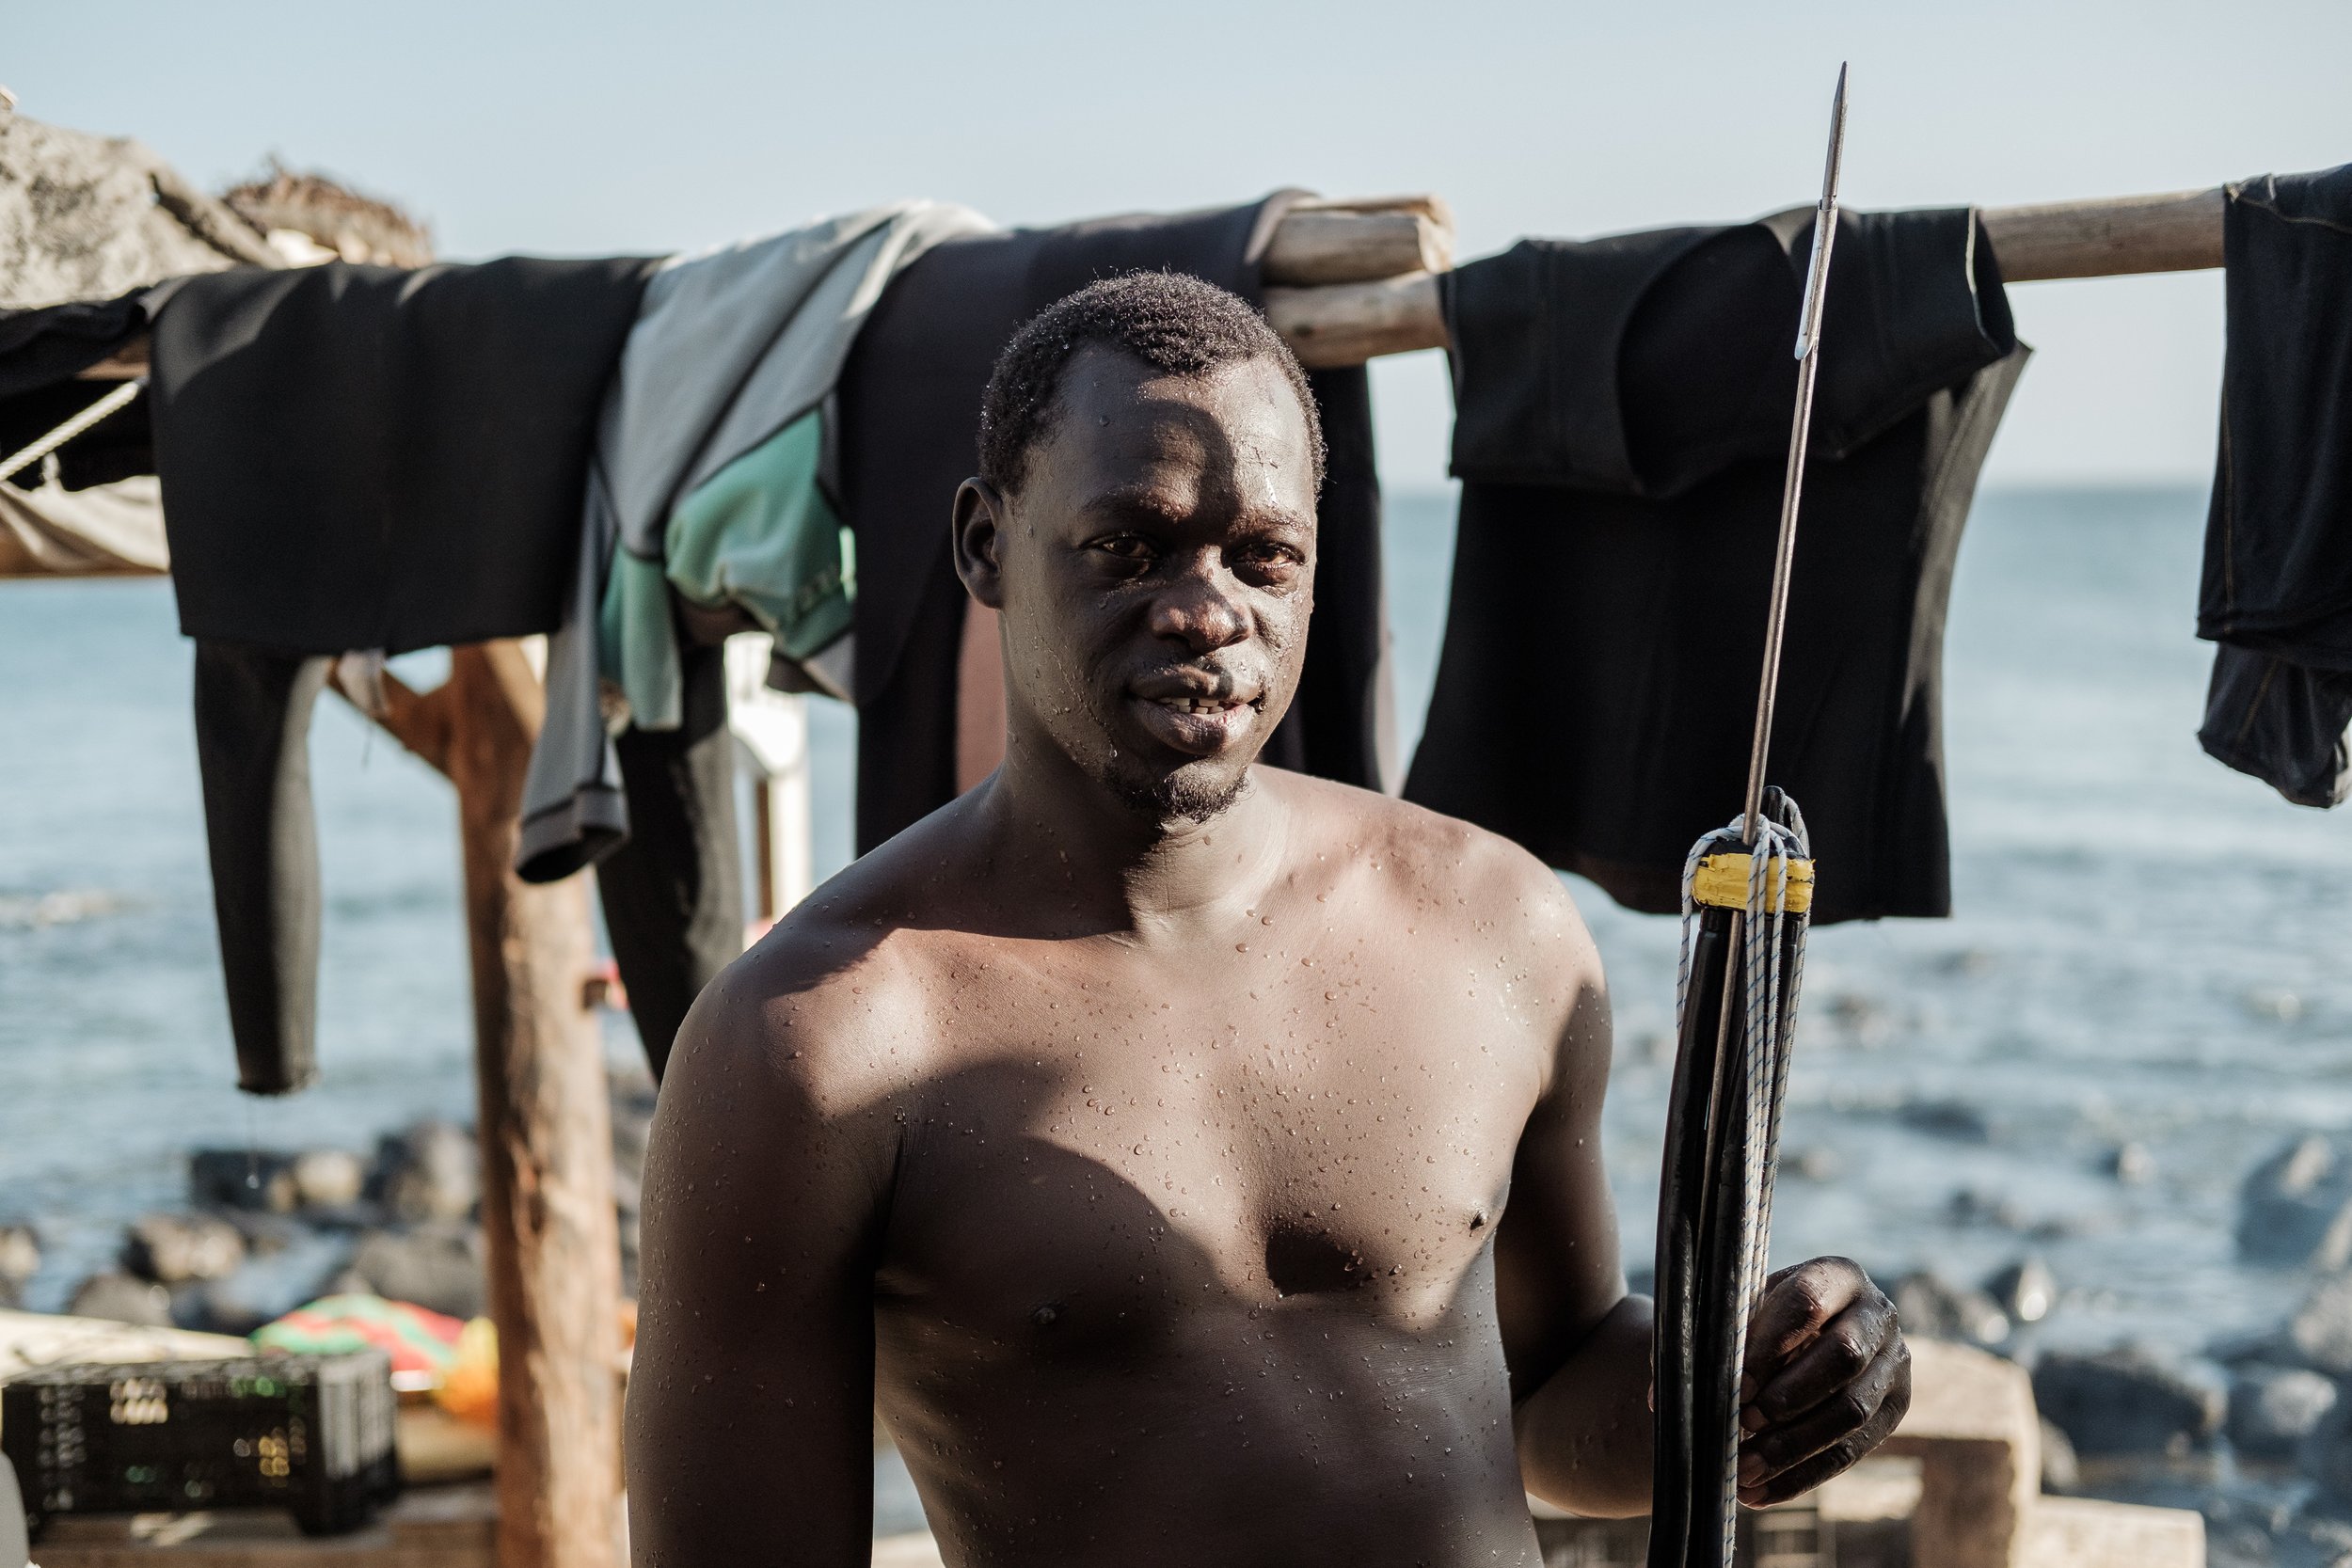  Spear-Fisherman of Dakar 